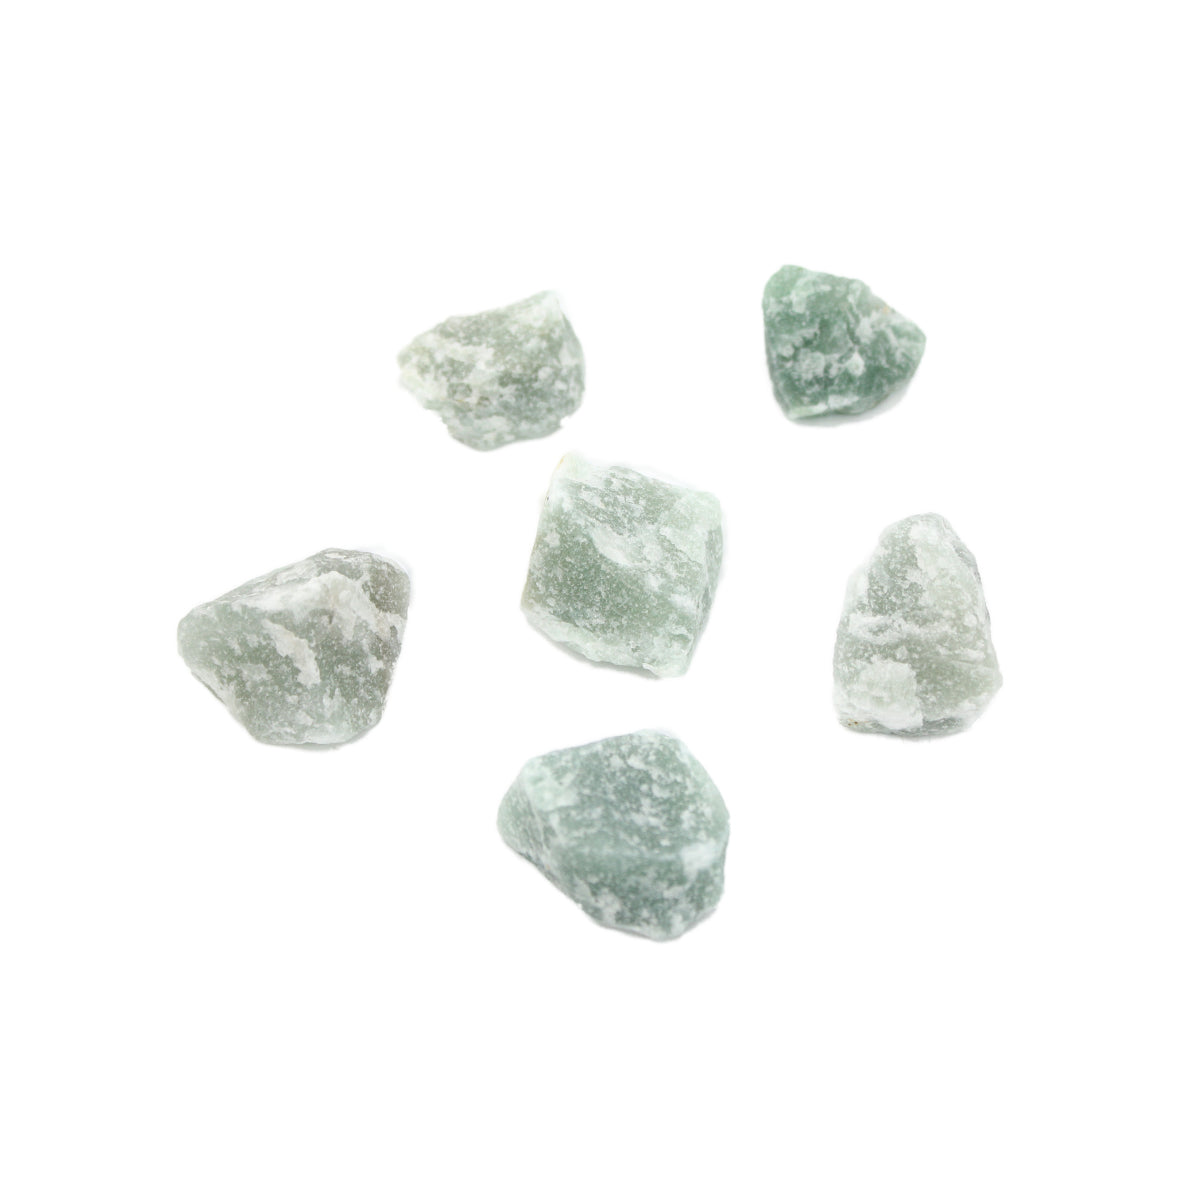 Green Quartz Stone/Mineral